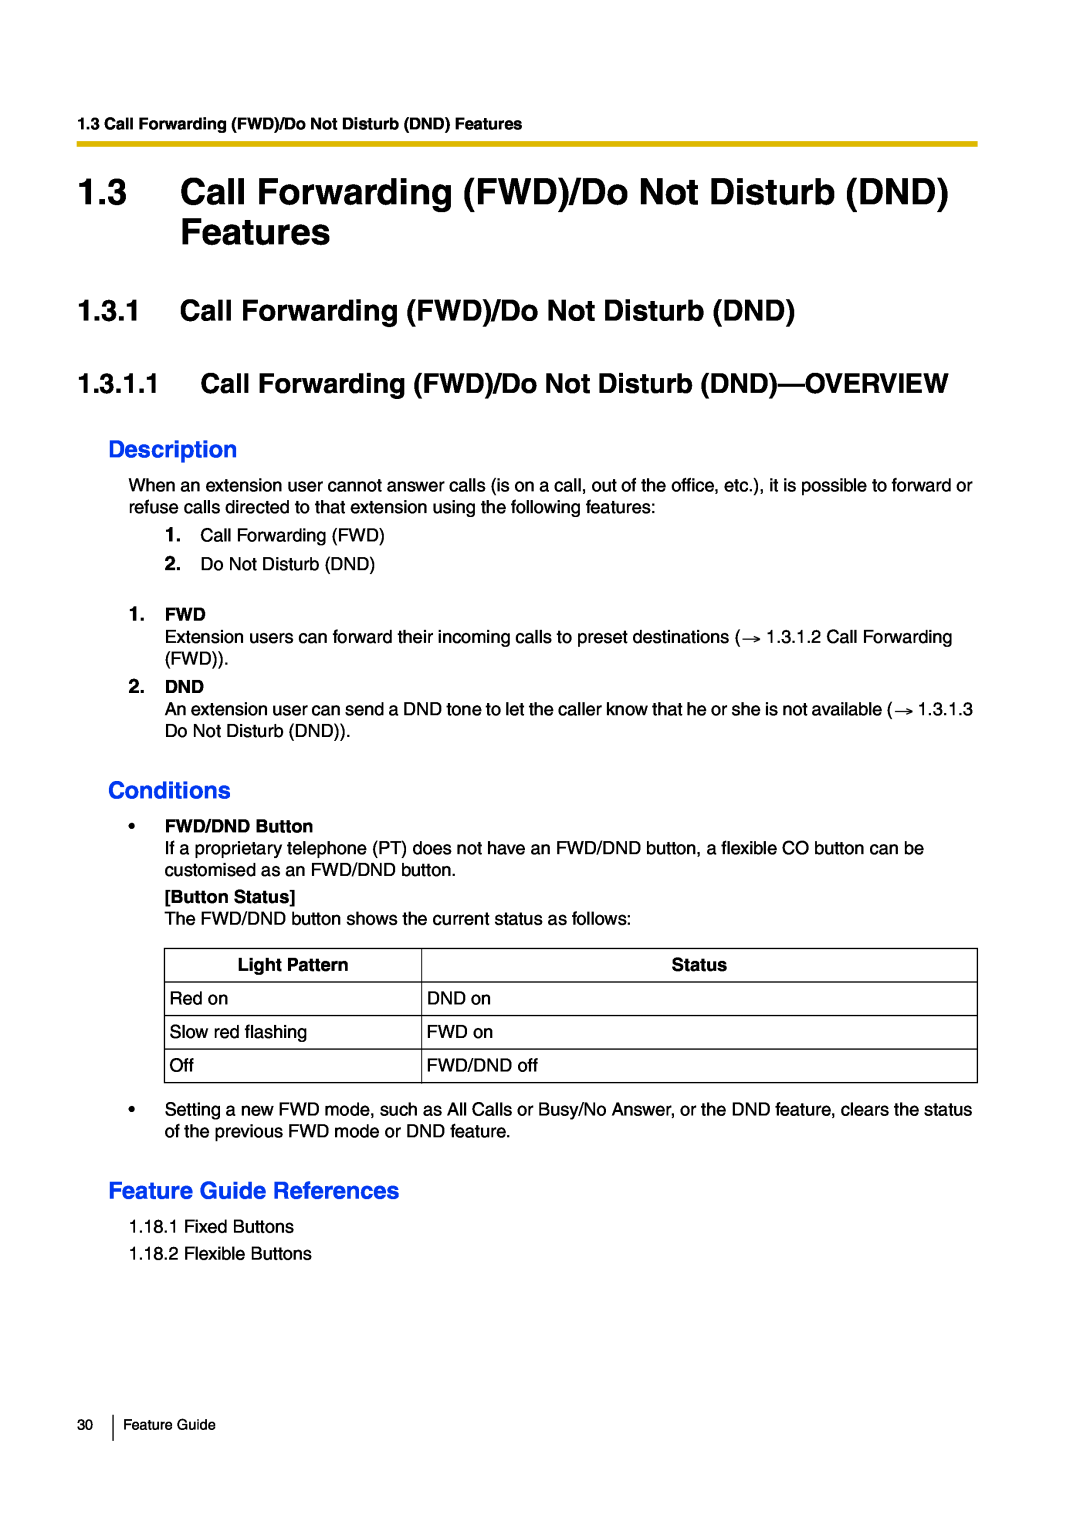 Panasonic kx-tea308 1.3.1Call Forwarding FWD/Do Not Disturb DND, Description, Conditions, Feature Guide References, 1.FWD 